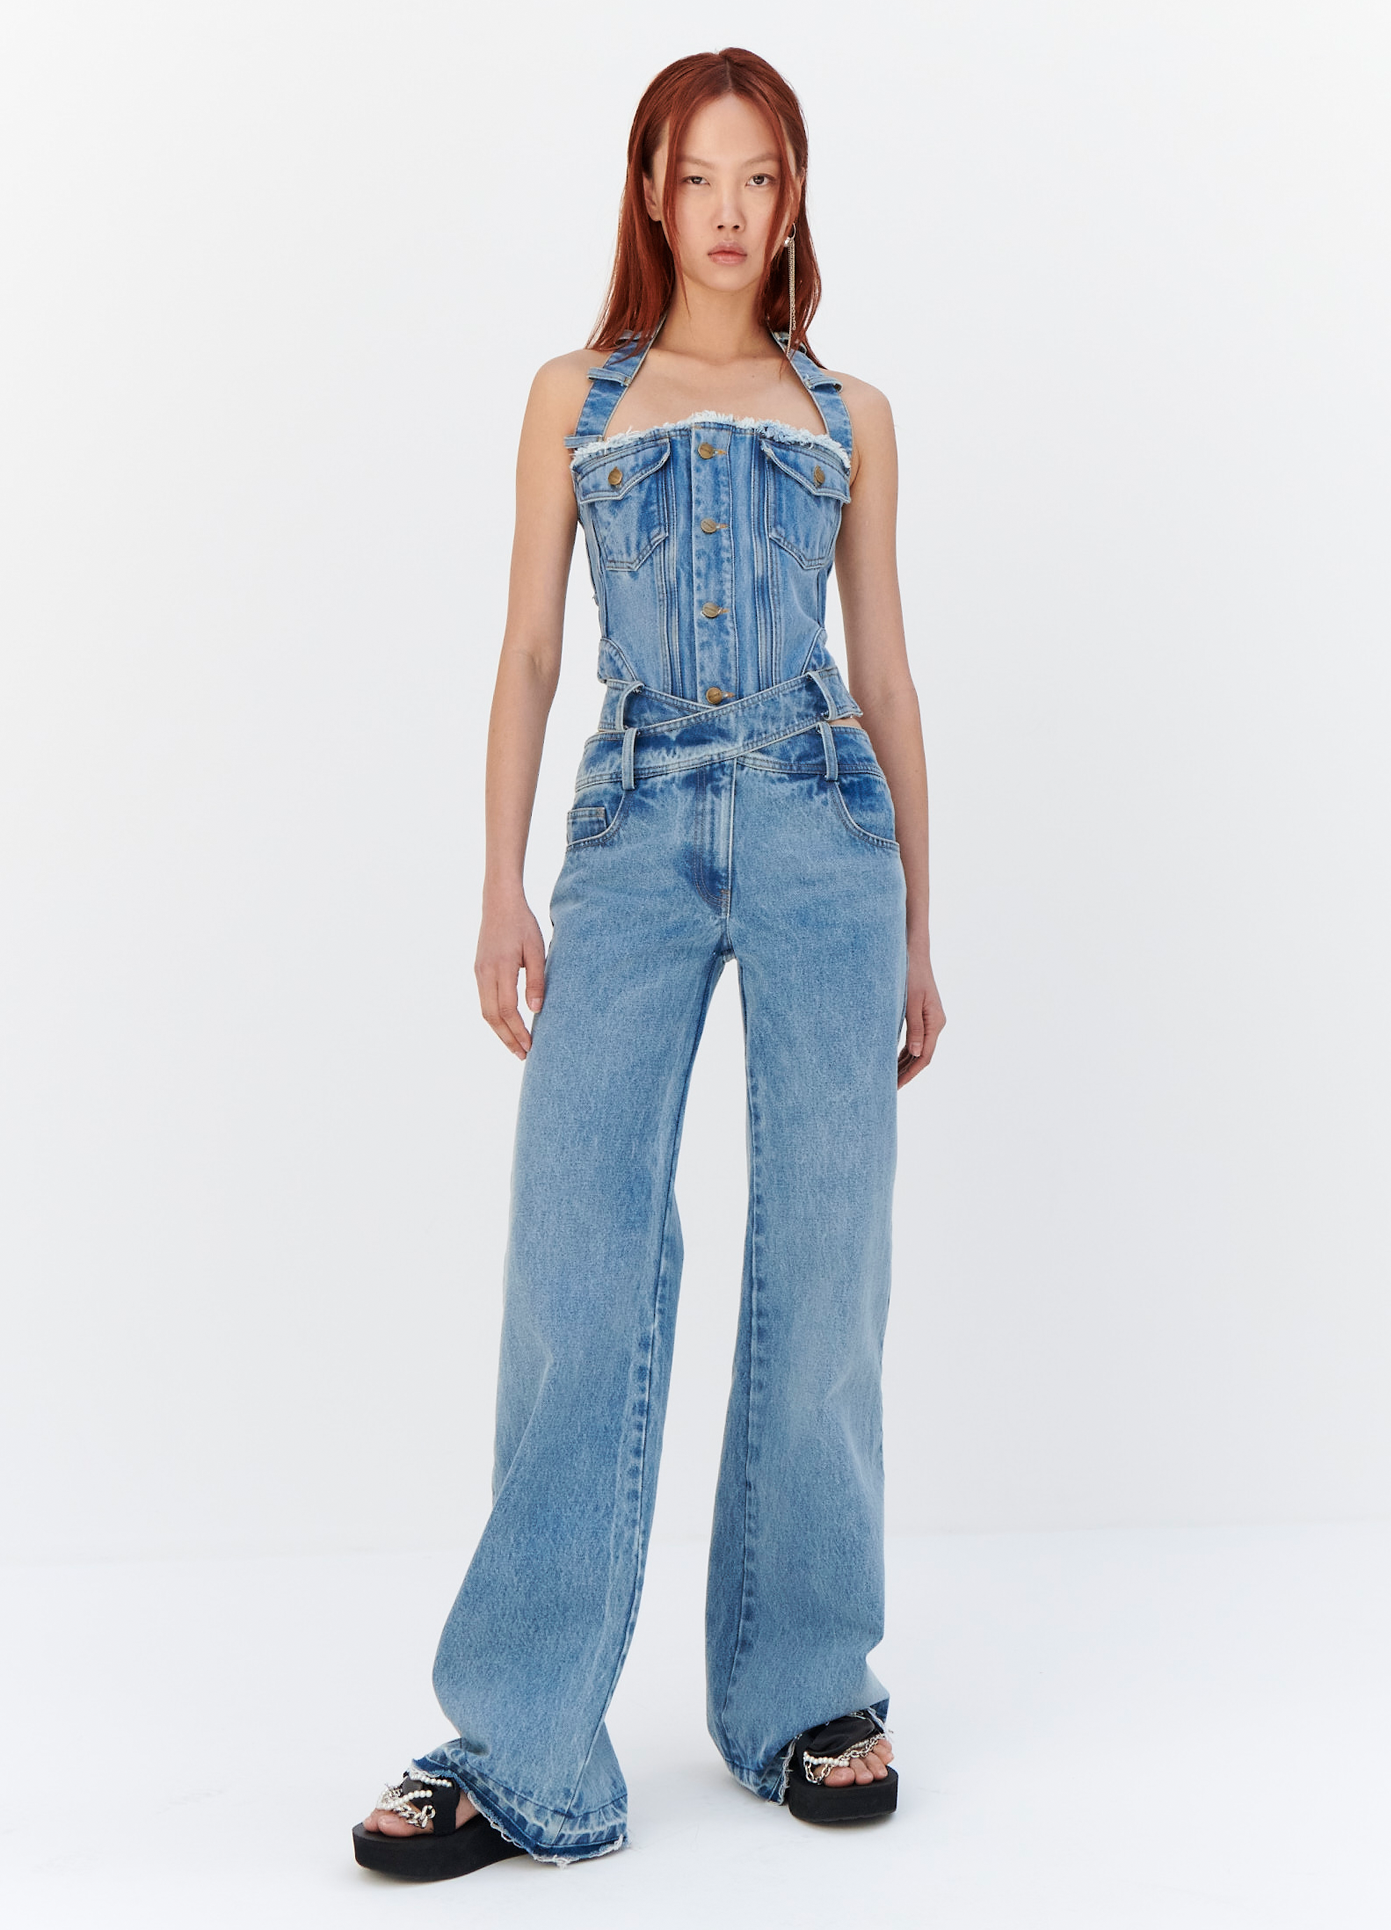 MONSE Criss Cross Waist Jeans in Indigo on model with denim halter full front view